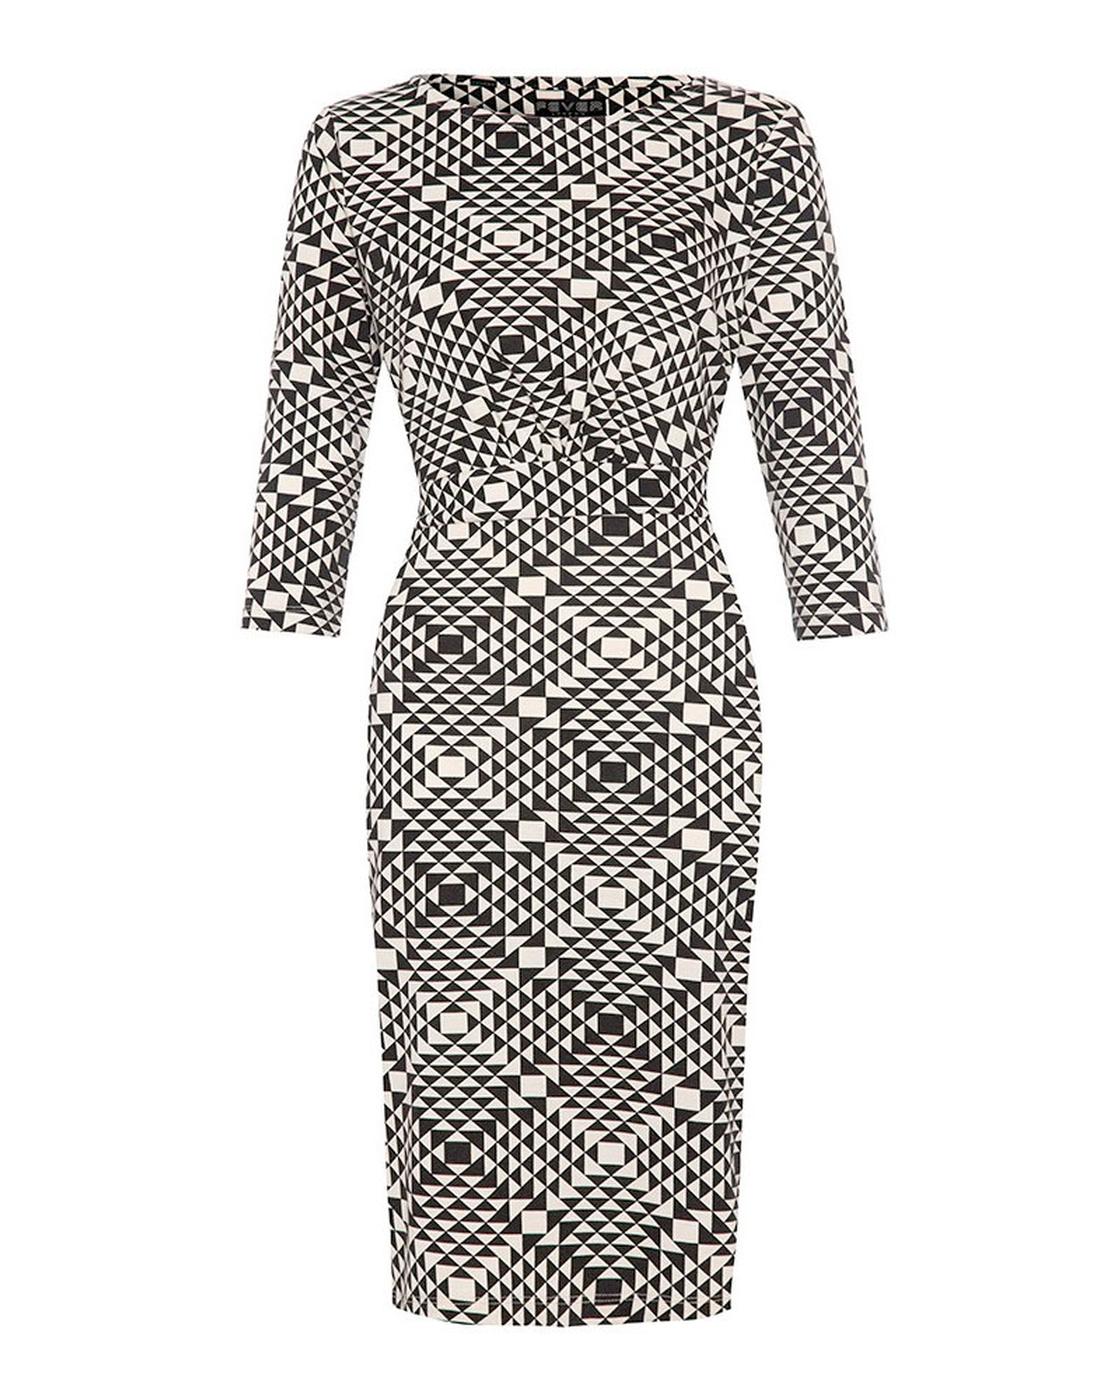 FEVER Albers 60's Vintage Geometric Print Jersey Pencil Dress